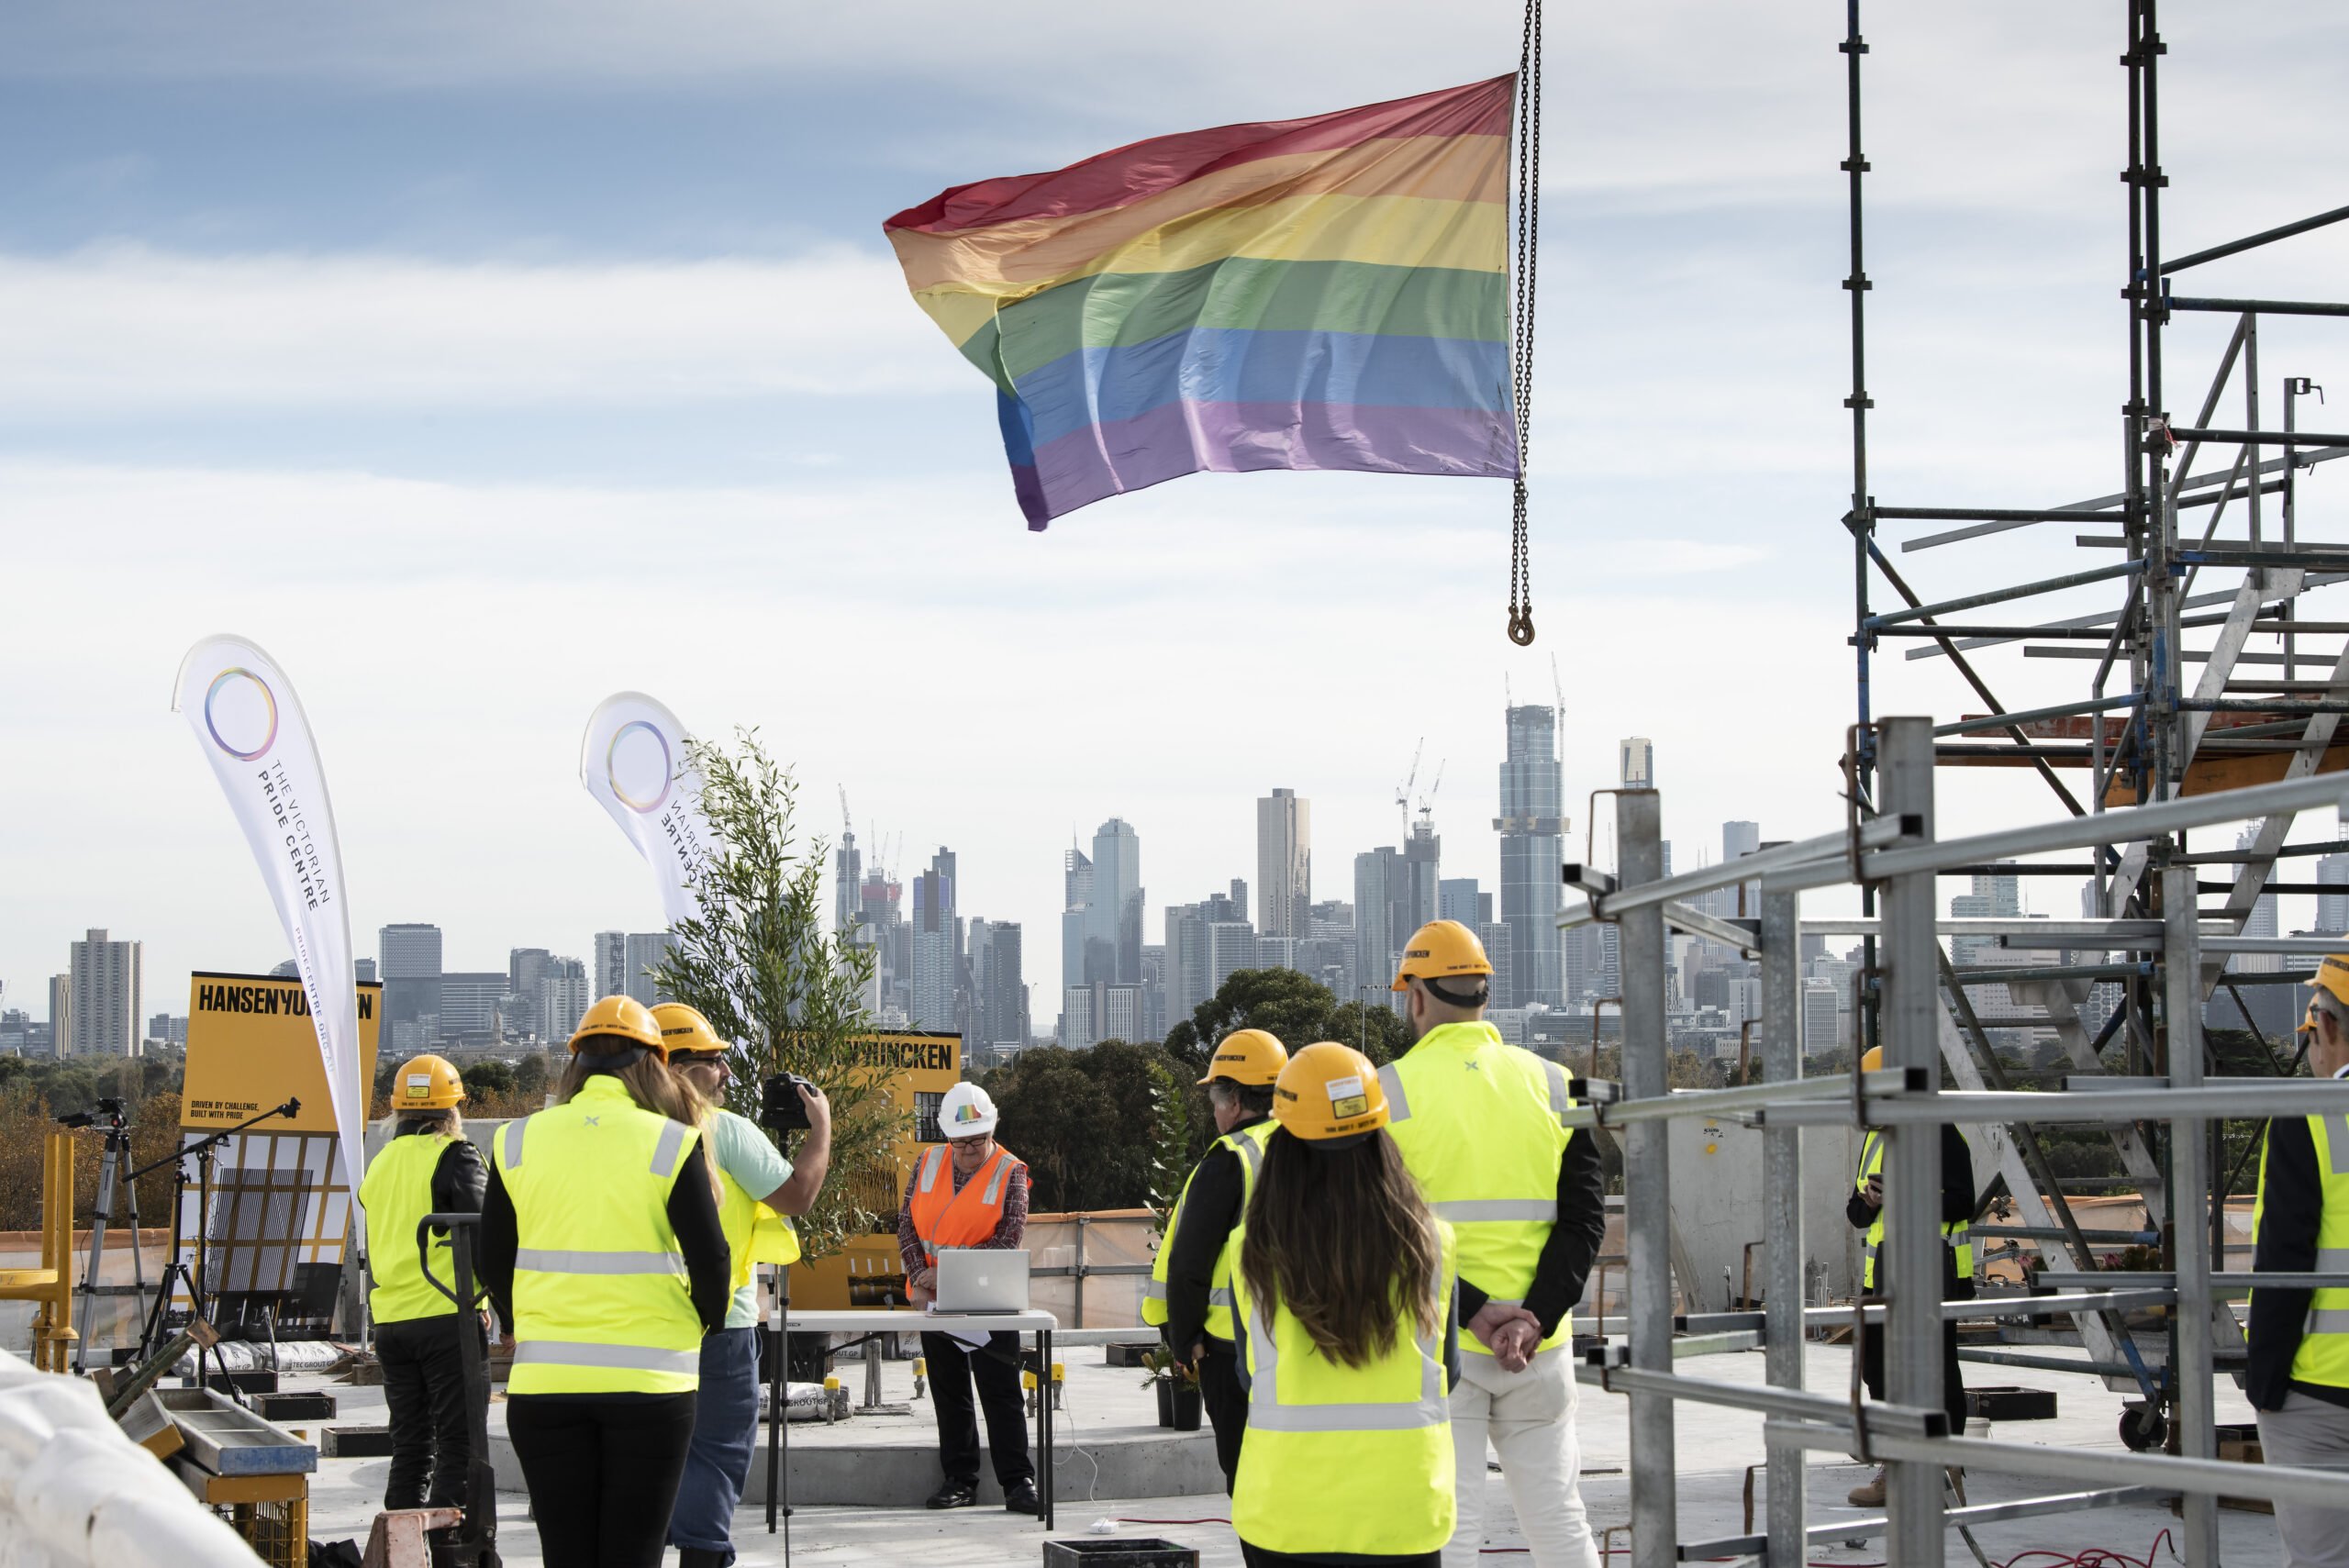 Hansen Yuncken delivers Australia's first purpose-built LGBTIQ+ community hub